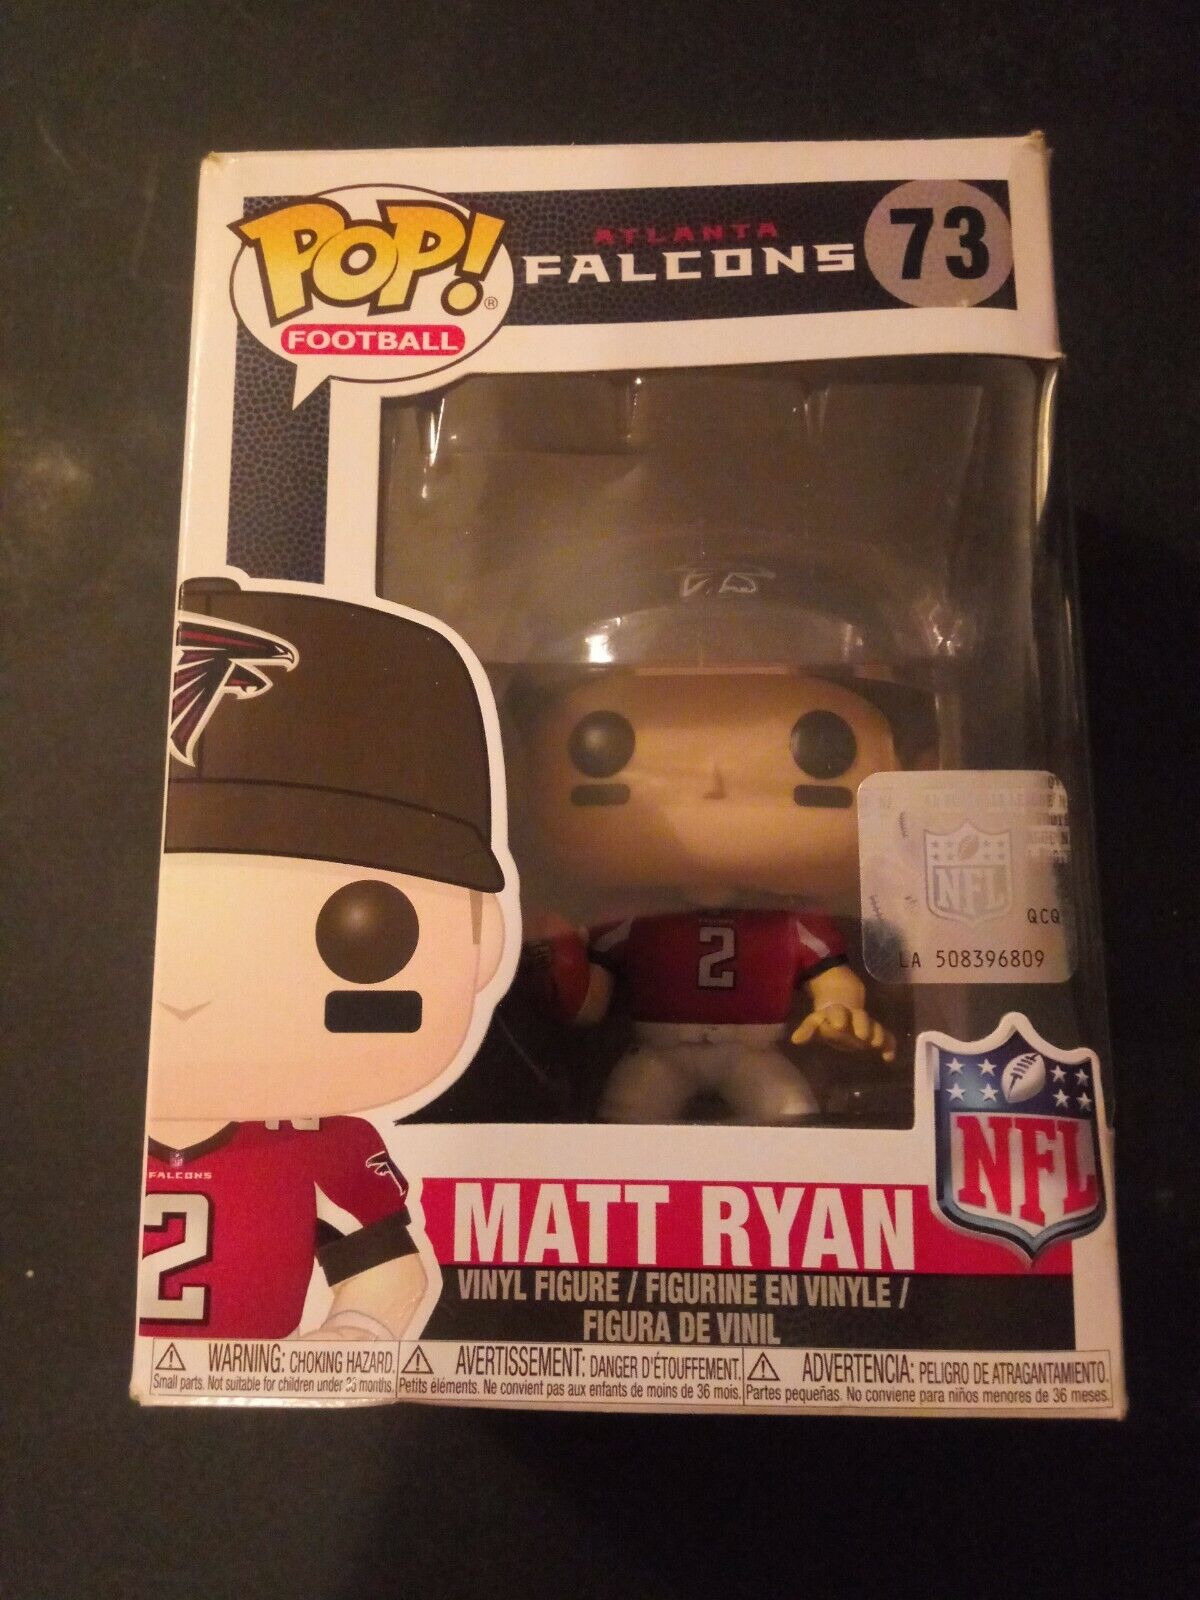 2017 Matt Ryan Funko Pop Football #73 Atlanta Falcons Vinyl Figure NFL  Open Box